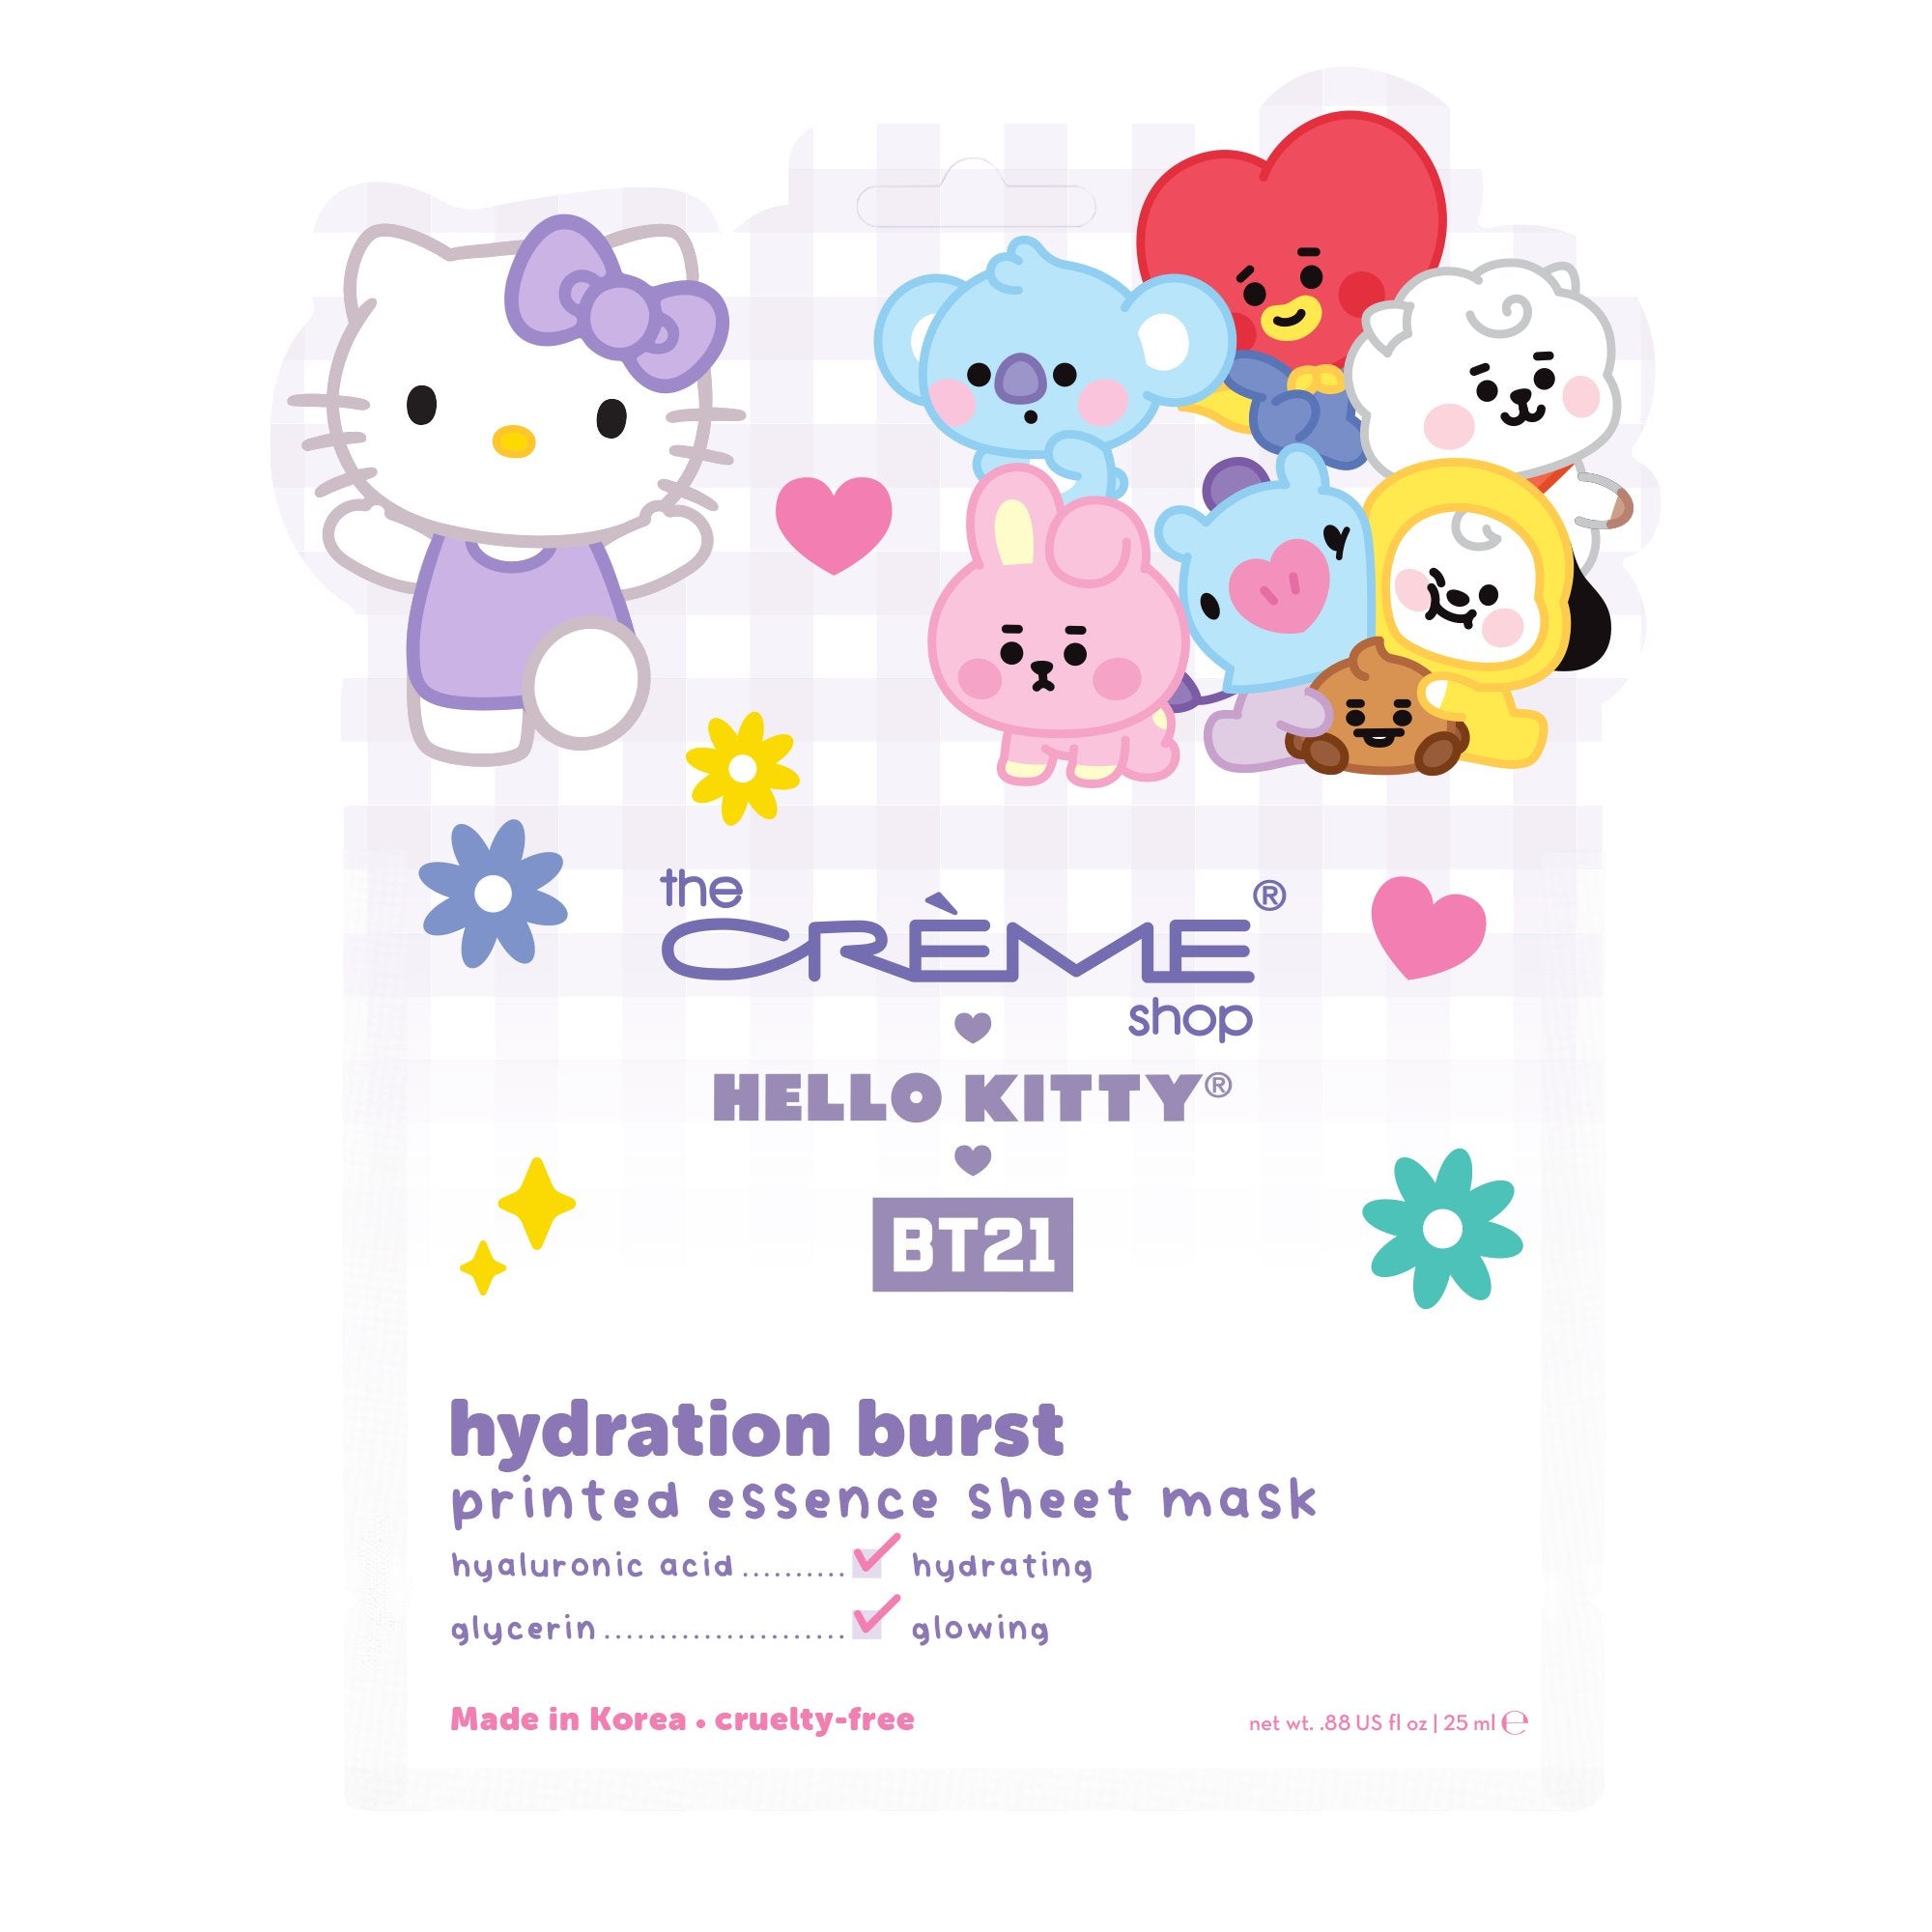 Hydrating and Glowing Hello Kitty & BT21 Hydration Burst Printed Essence Sheet Mask, $4